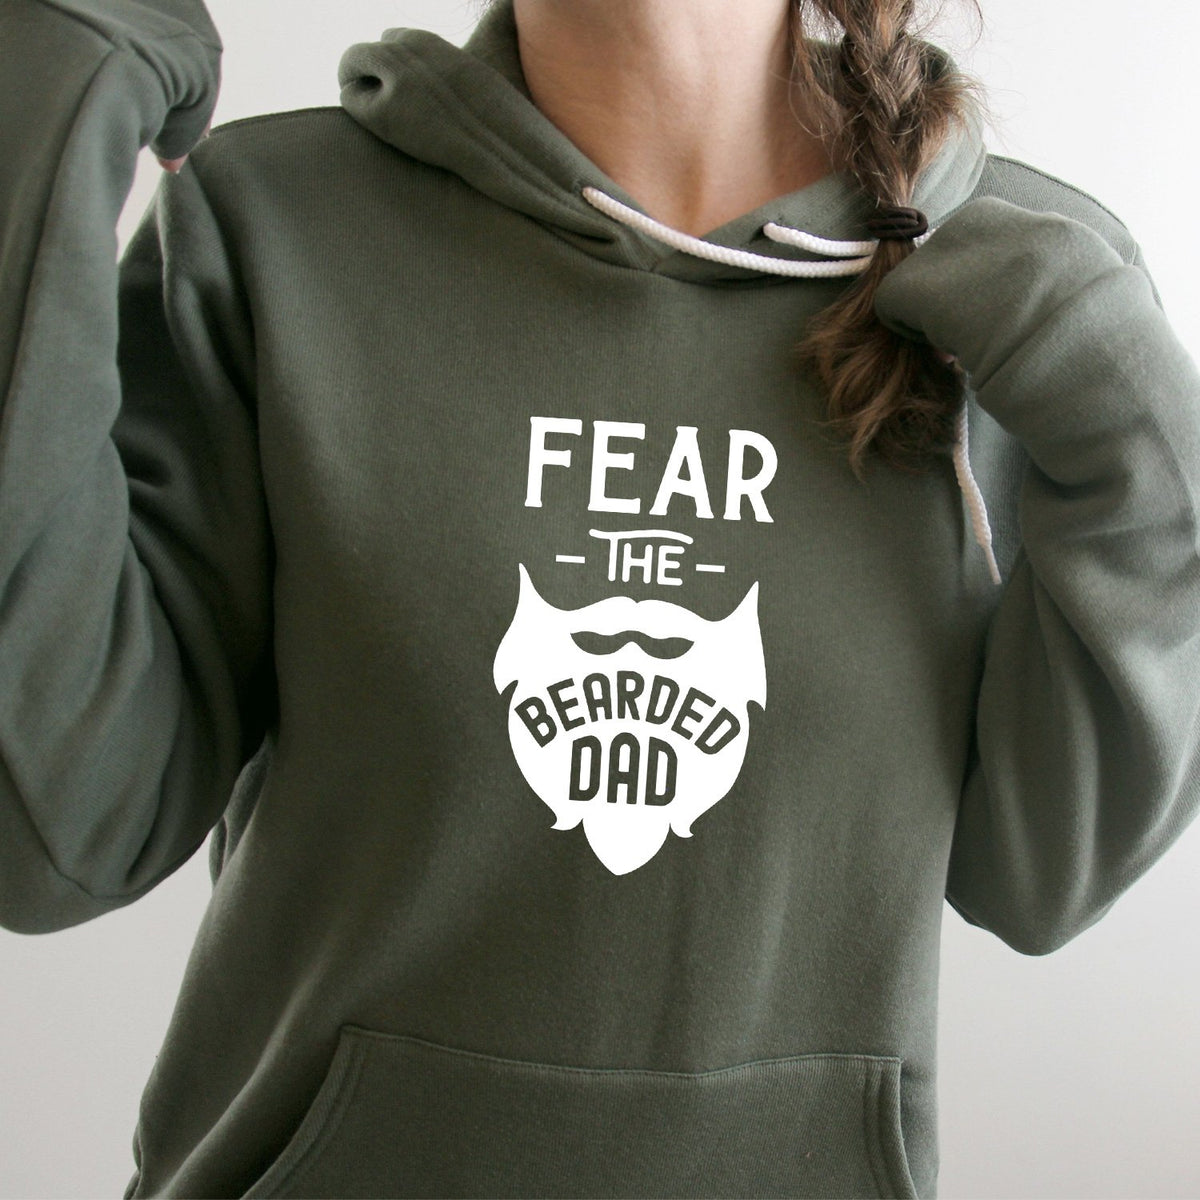 Fear The Bearded Dad - Hoodie Sweatshirt